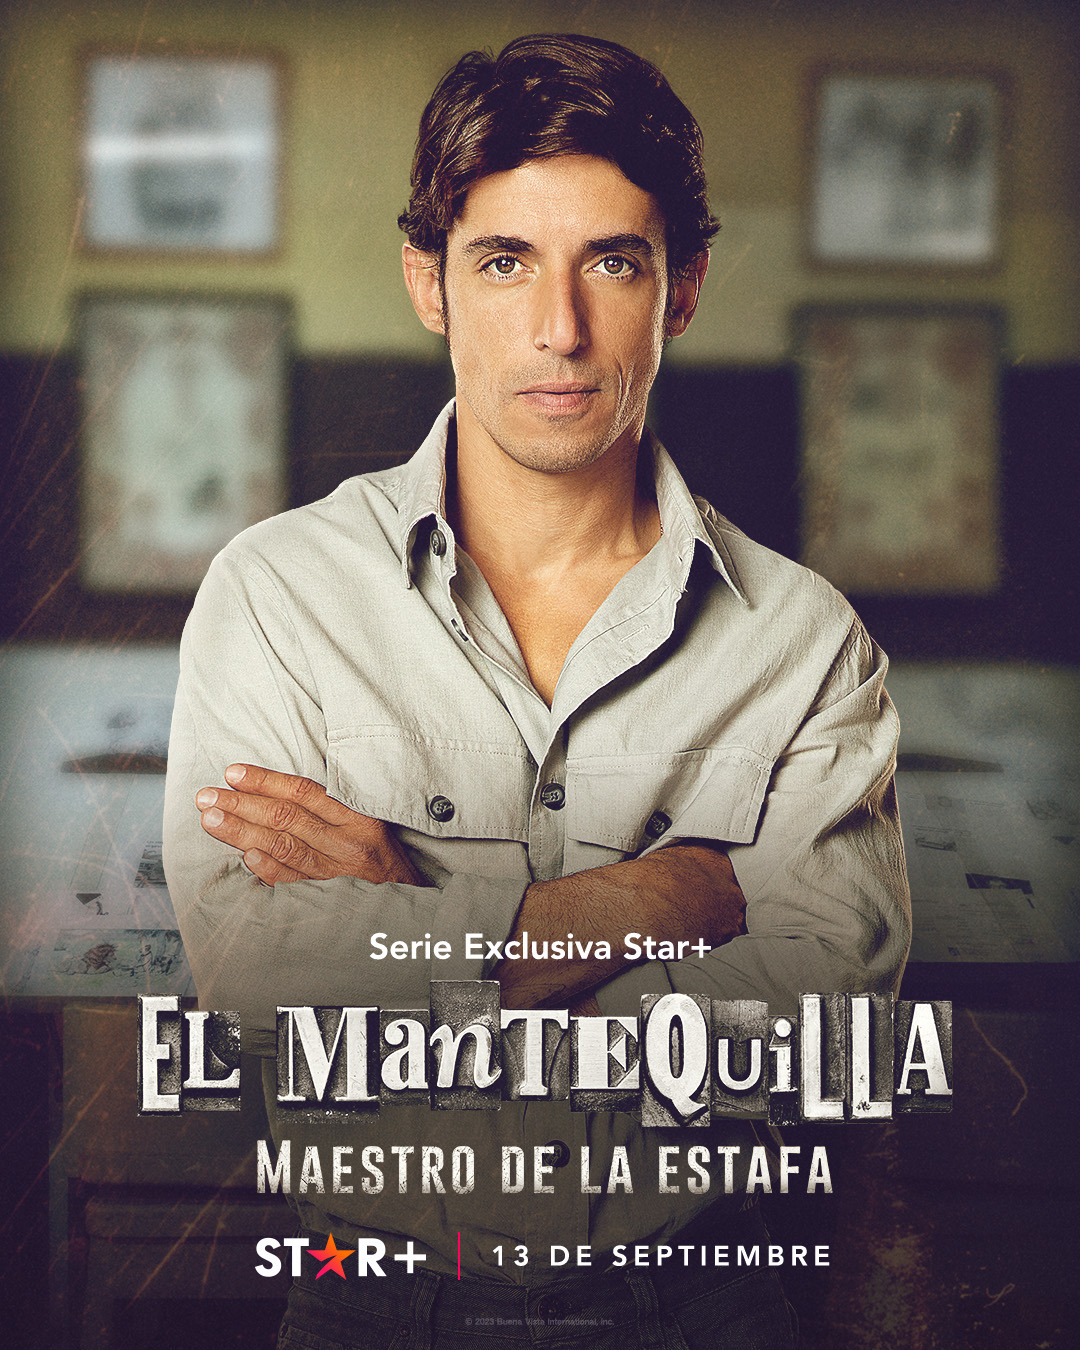 Extra Large TV Poster Image for El Mantequilla: Maestro De La Estafa (#4 of 5)